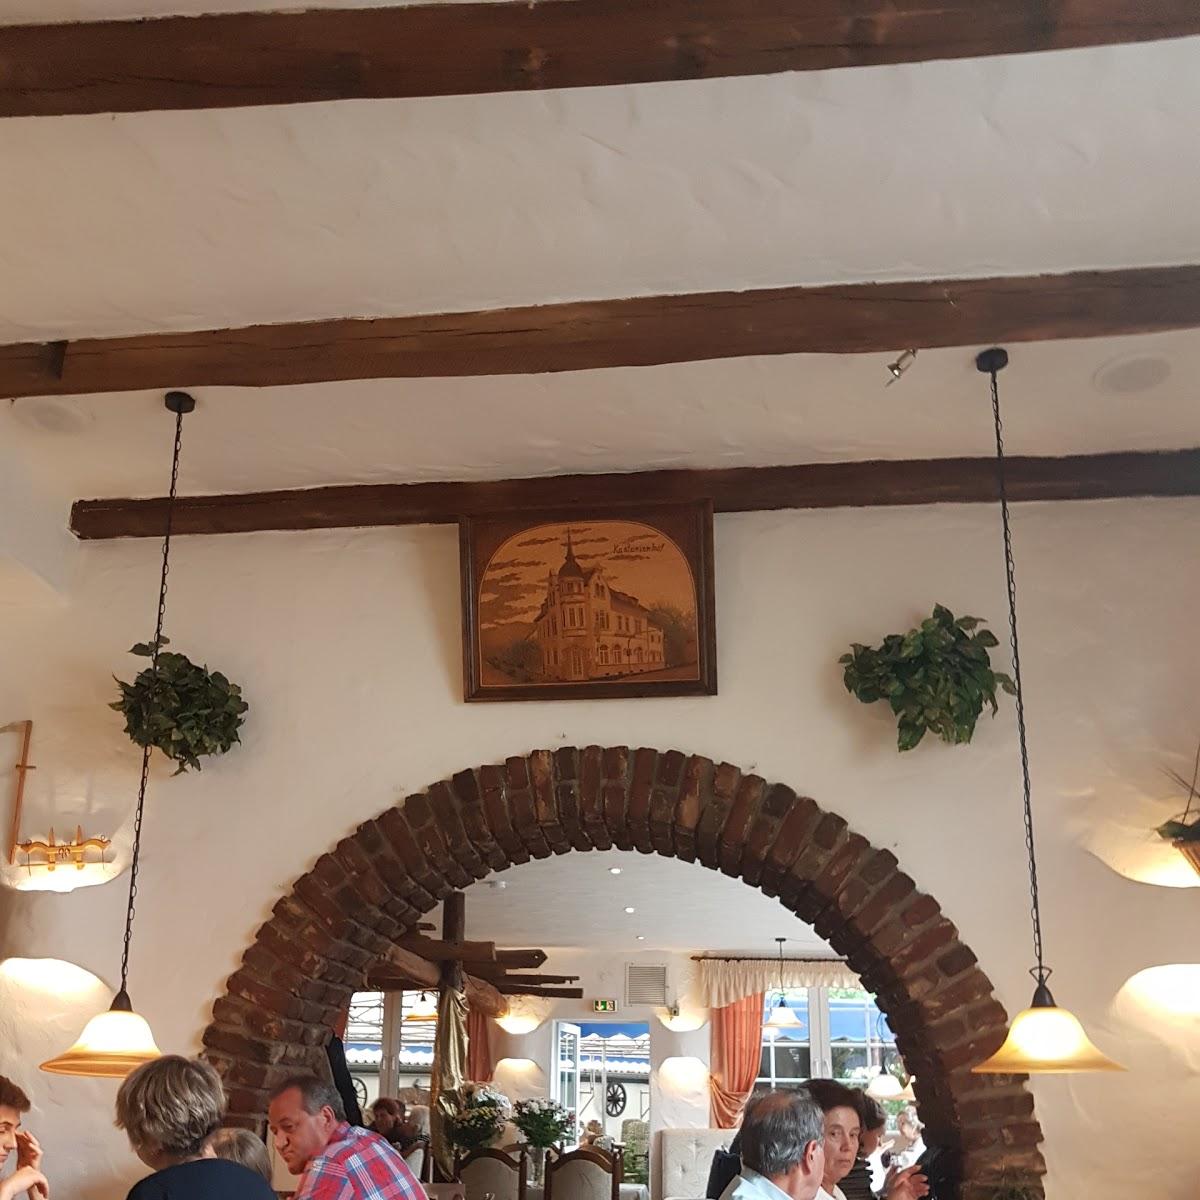 Restaurant "Kastanienhof" in Siegburg